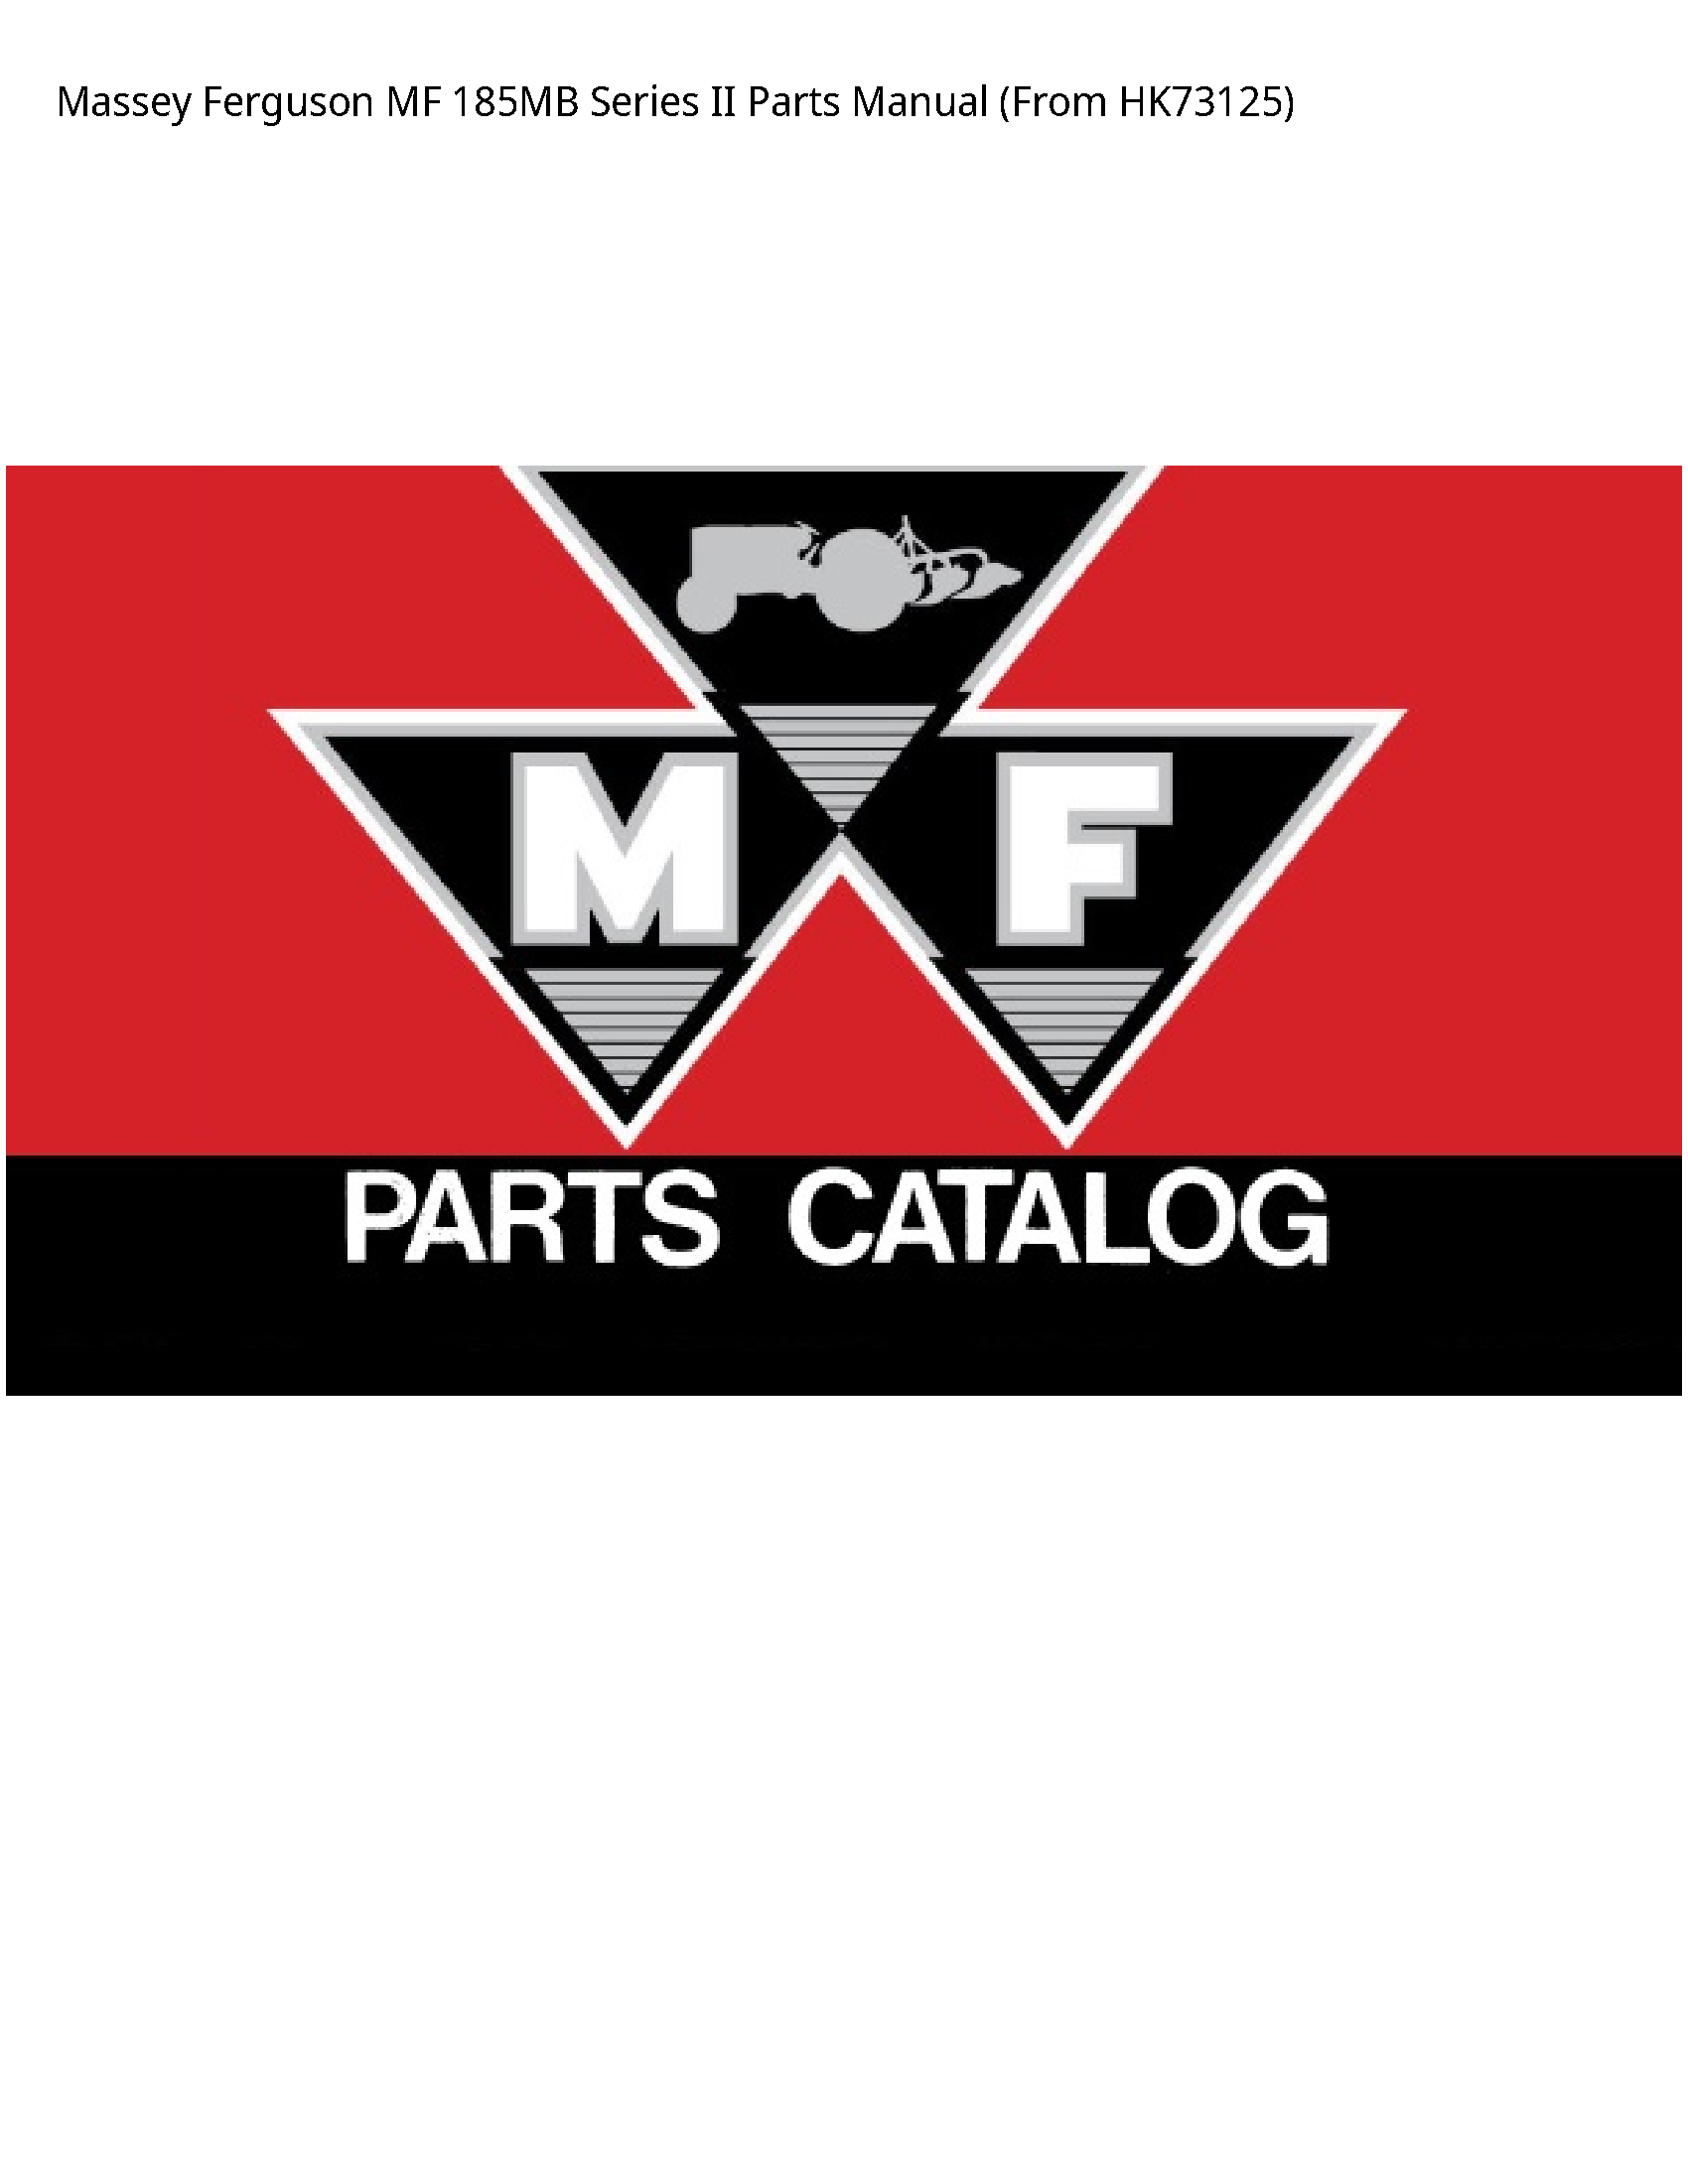 Massey Ferguson 185MB MF Series II Parts manual